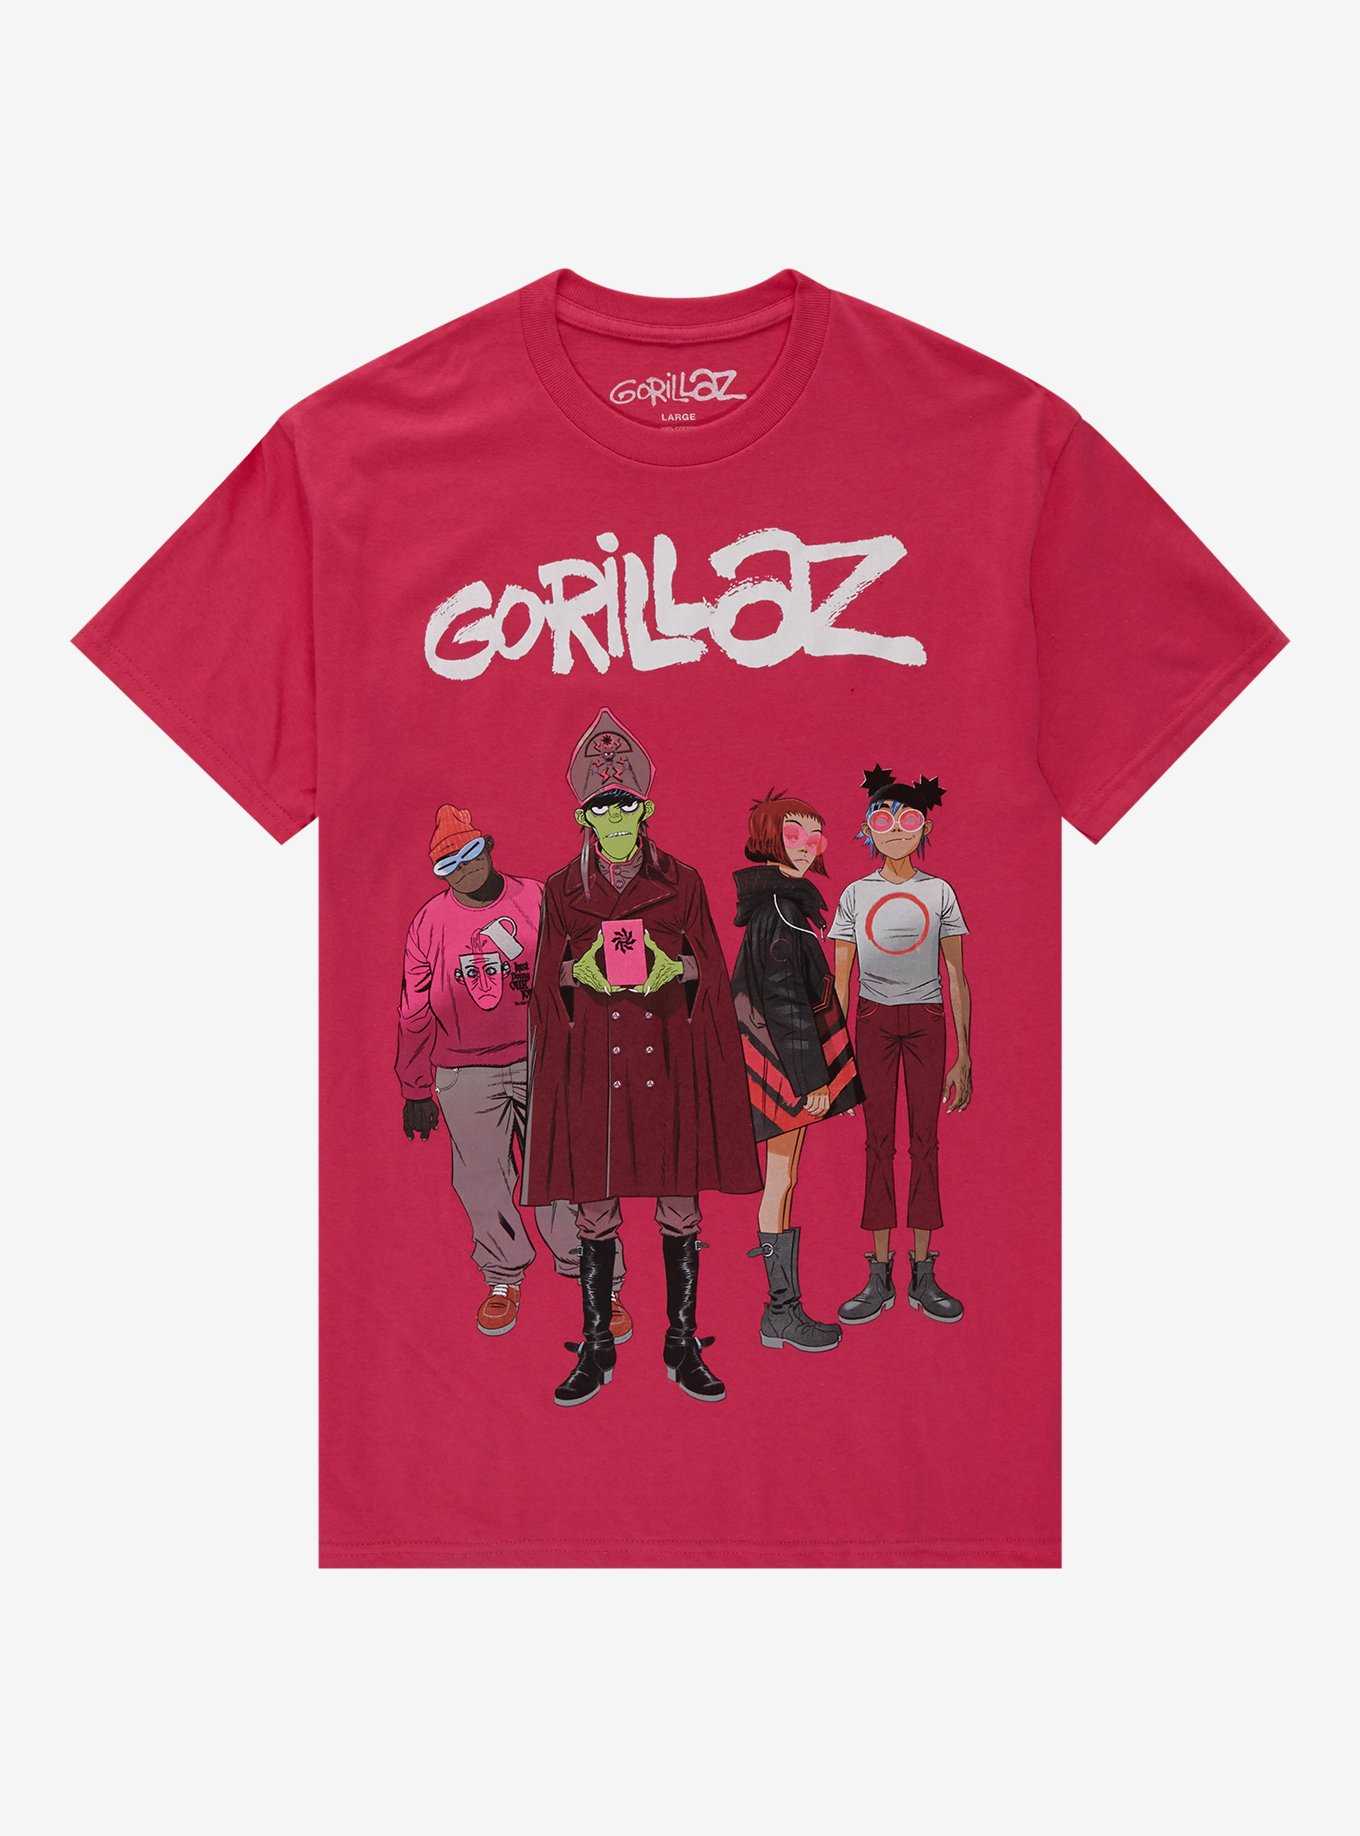 Gorillaz Cracker Island Boyfriend Fit Girls T-Shirt, , hi-res